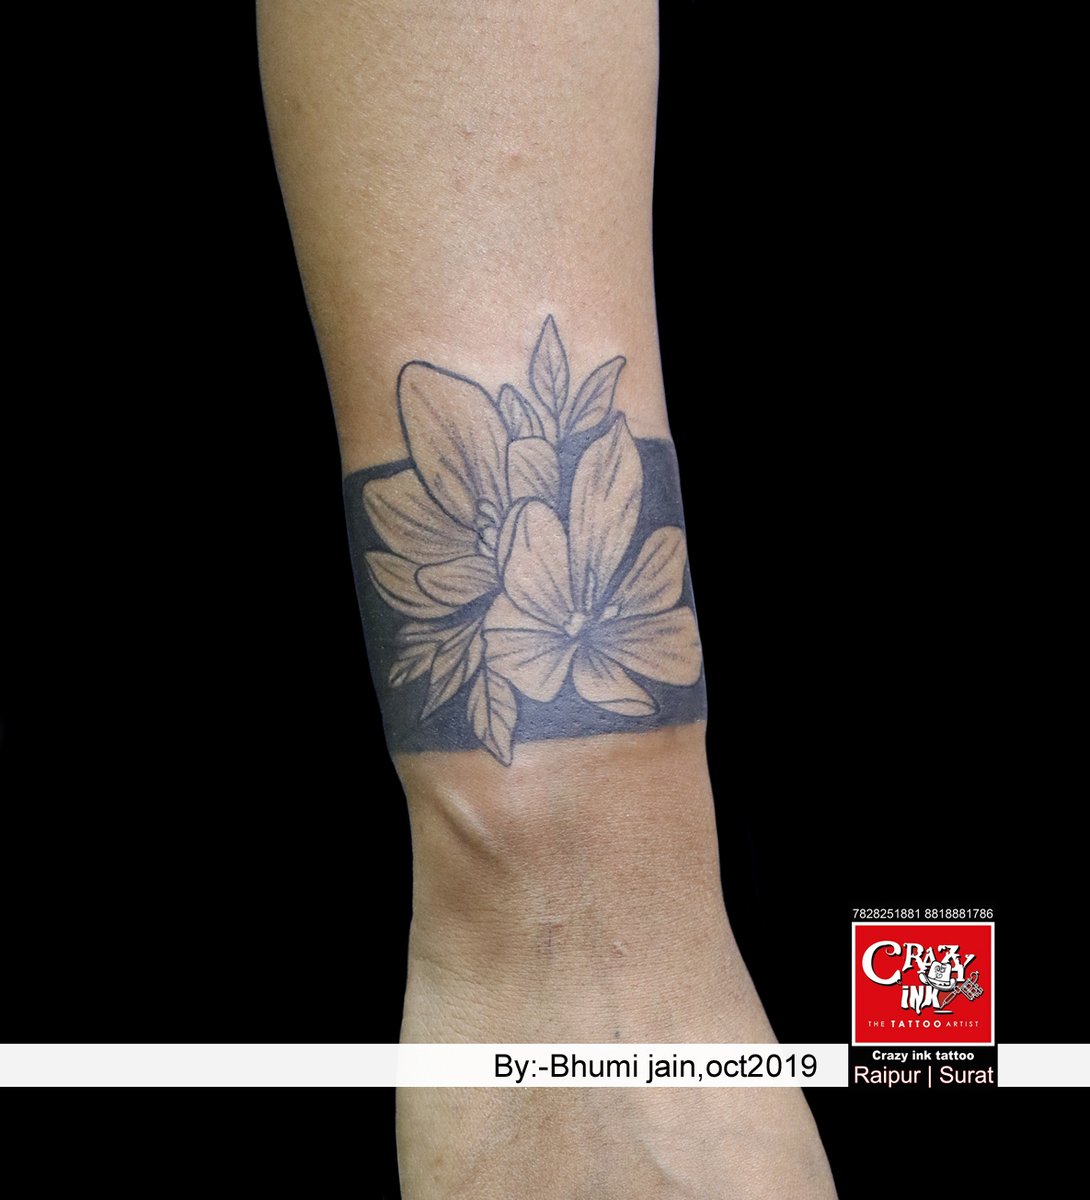 Little Tattoos  Blueberry armband tattoo Tattoo artist Sol